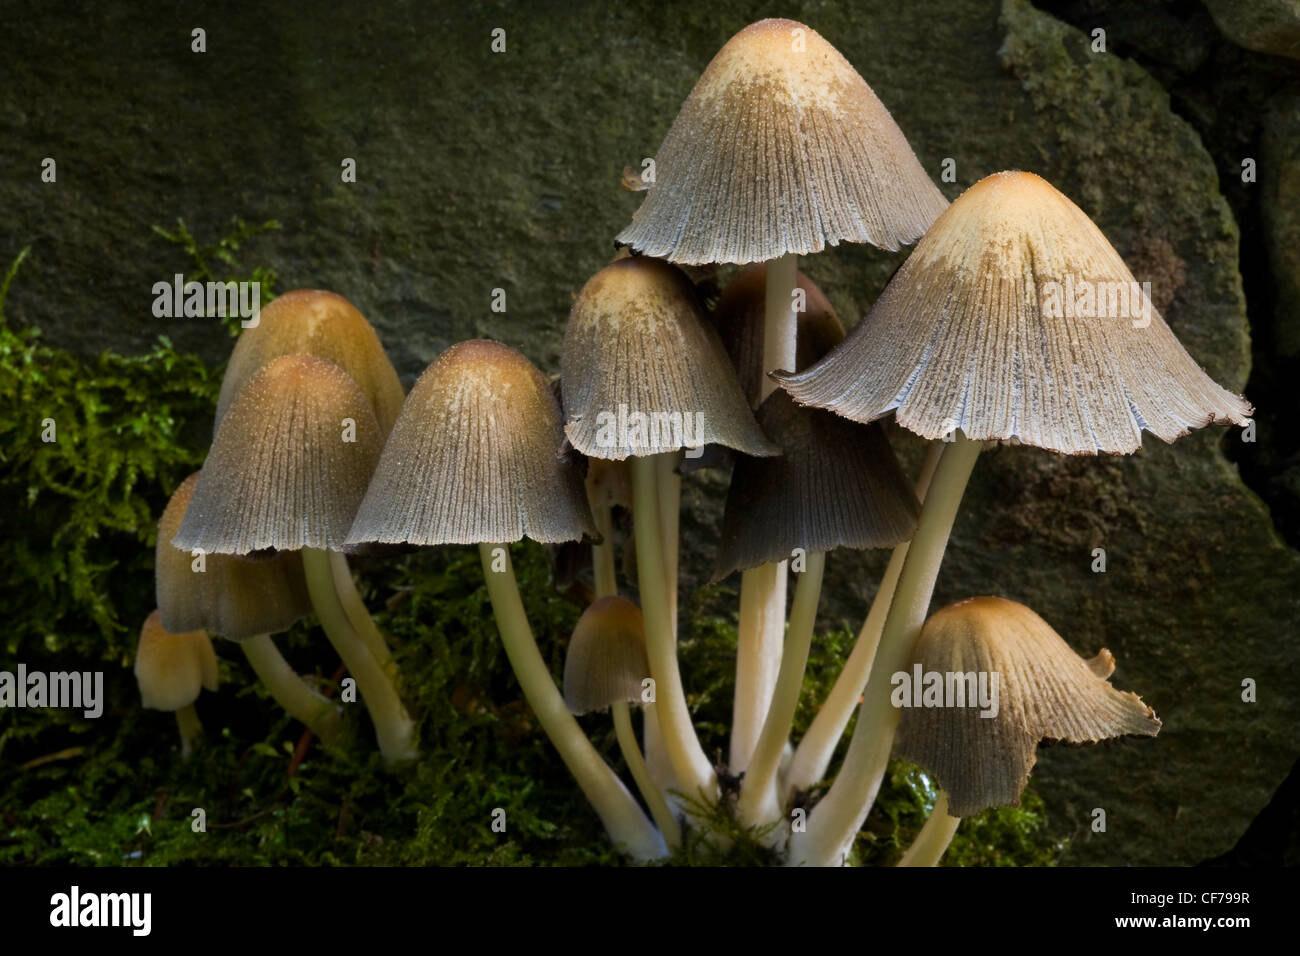 Inky Cap mushrooms (Coprinus atramentarius) growing in the Portland Japanese Garden, Portland, Oregon. USA Stock Photo